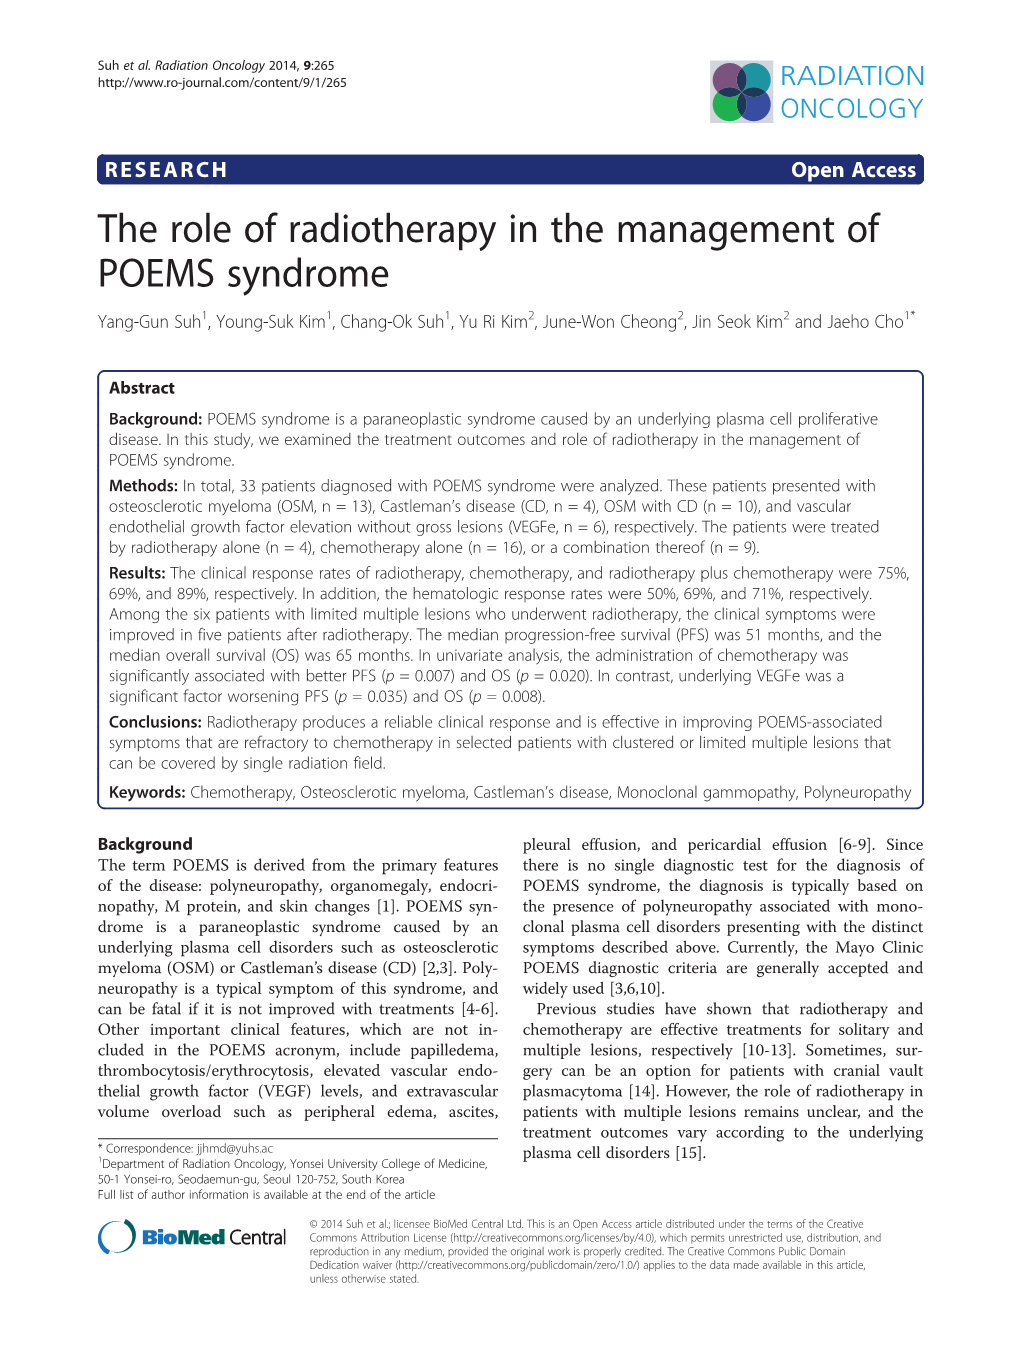 The Role of Radiotherapy in the Management of POEMS Syndrome Yang-Gun Suh1, Young-Suk Kim1, Chang-Ok Suh1, Yu Ri Kim2, June-Won Cheong2, Jin Seok Kim2 and Jaeho Cho1*